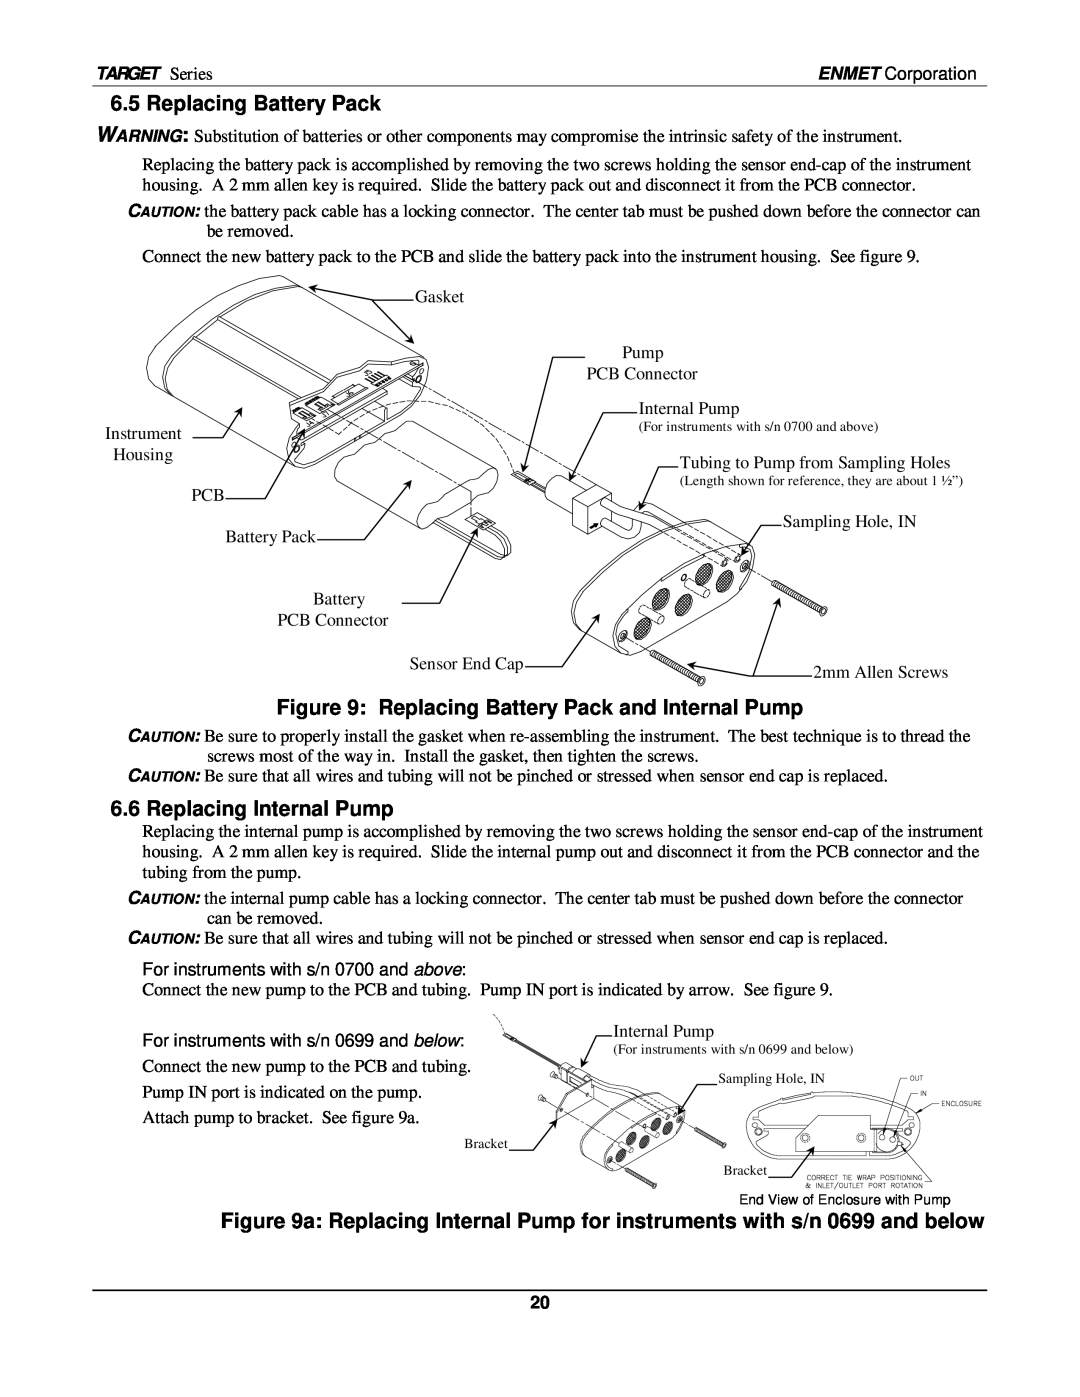 O2 Innovations pmn manual Replacing Battery Pack, Replacing Internal Pump, TARGET Series, ENMET Corporation 